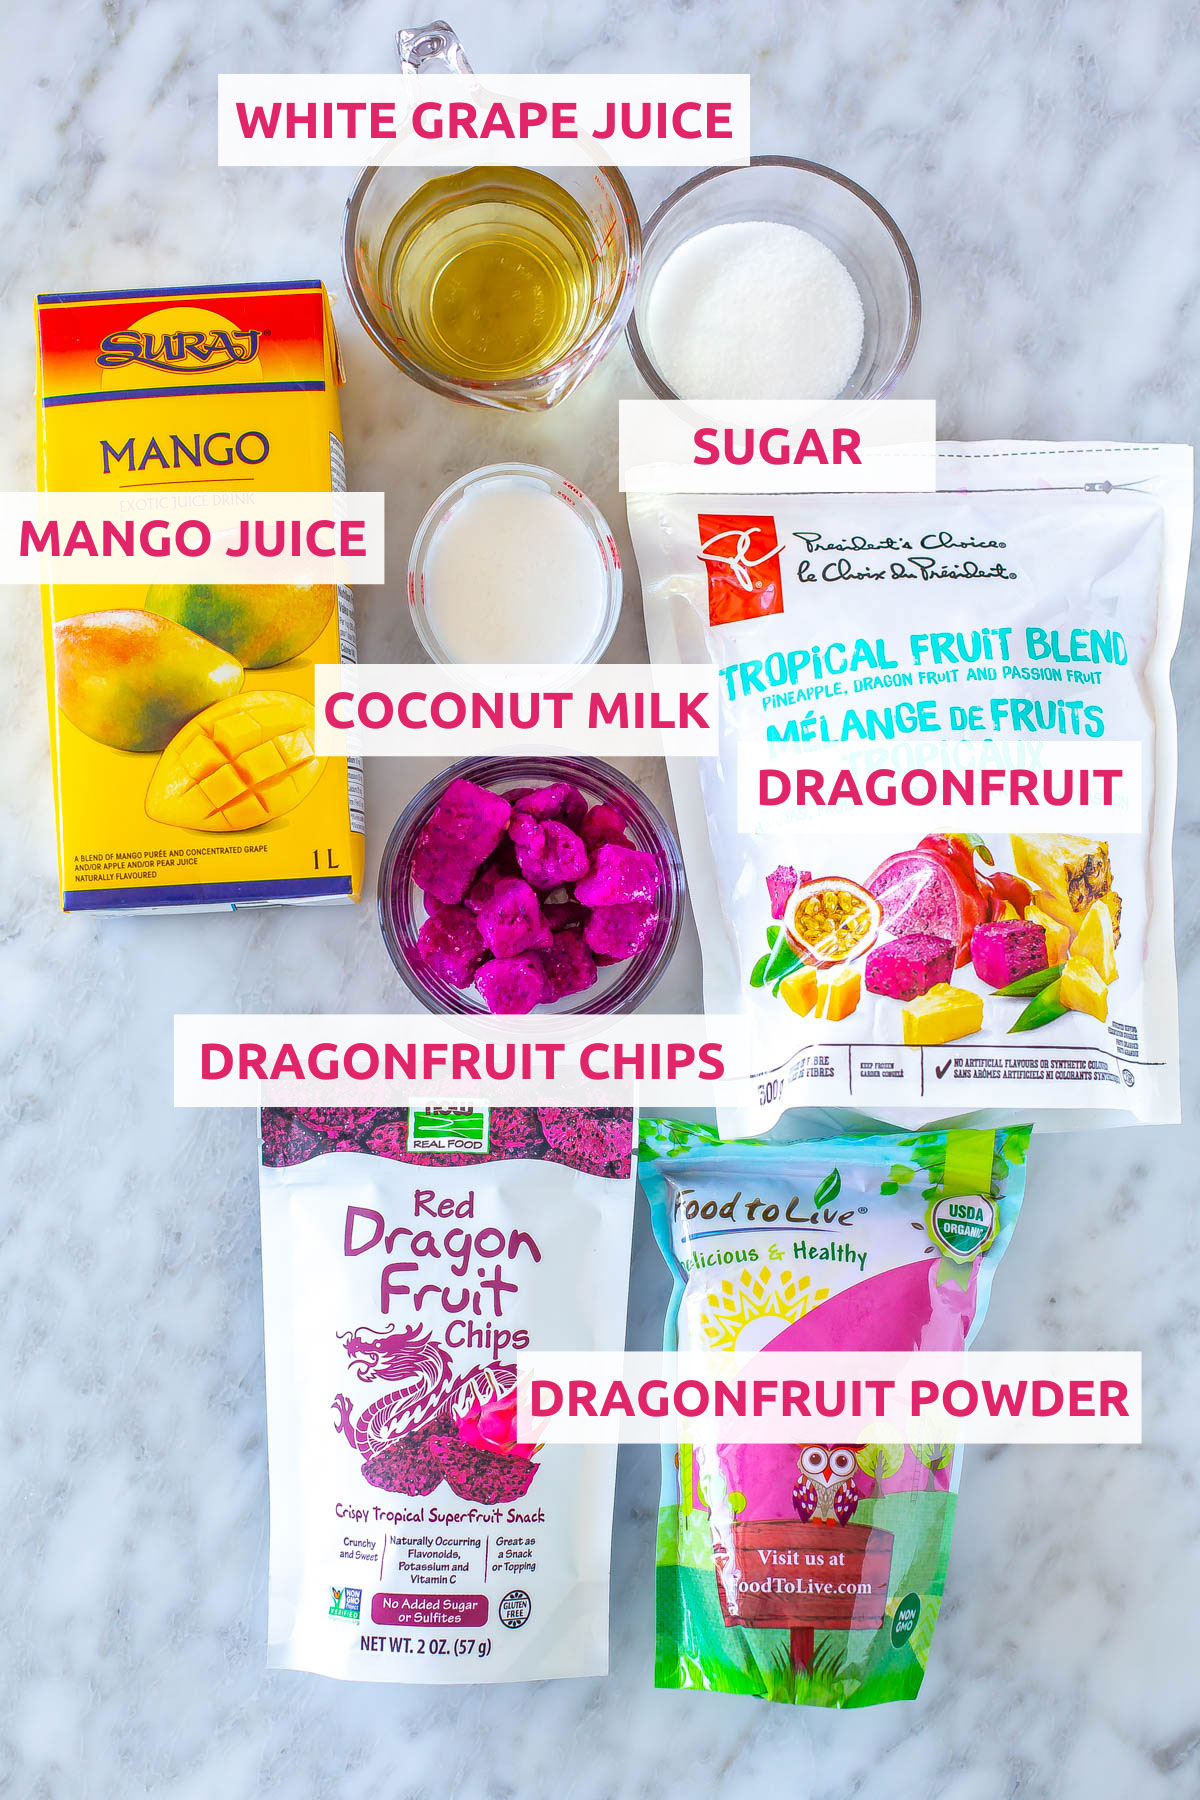 Ingredients for Starbucks mango dragonfruit refresher: dragonfruit pieces, dragonfruit powder, dragonfruit, sugar, mango juice, white grape juice and coconut milk.